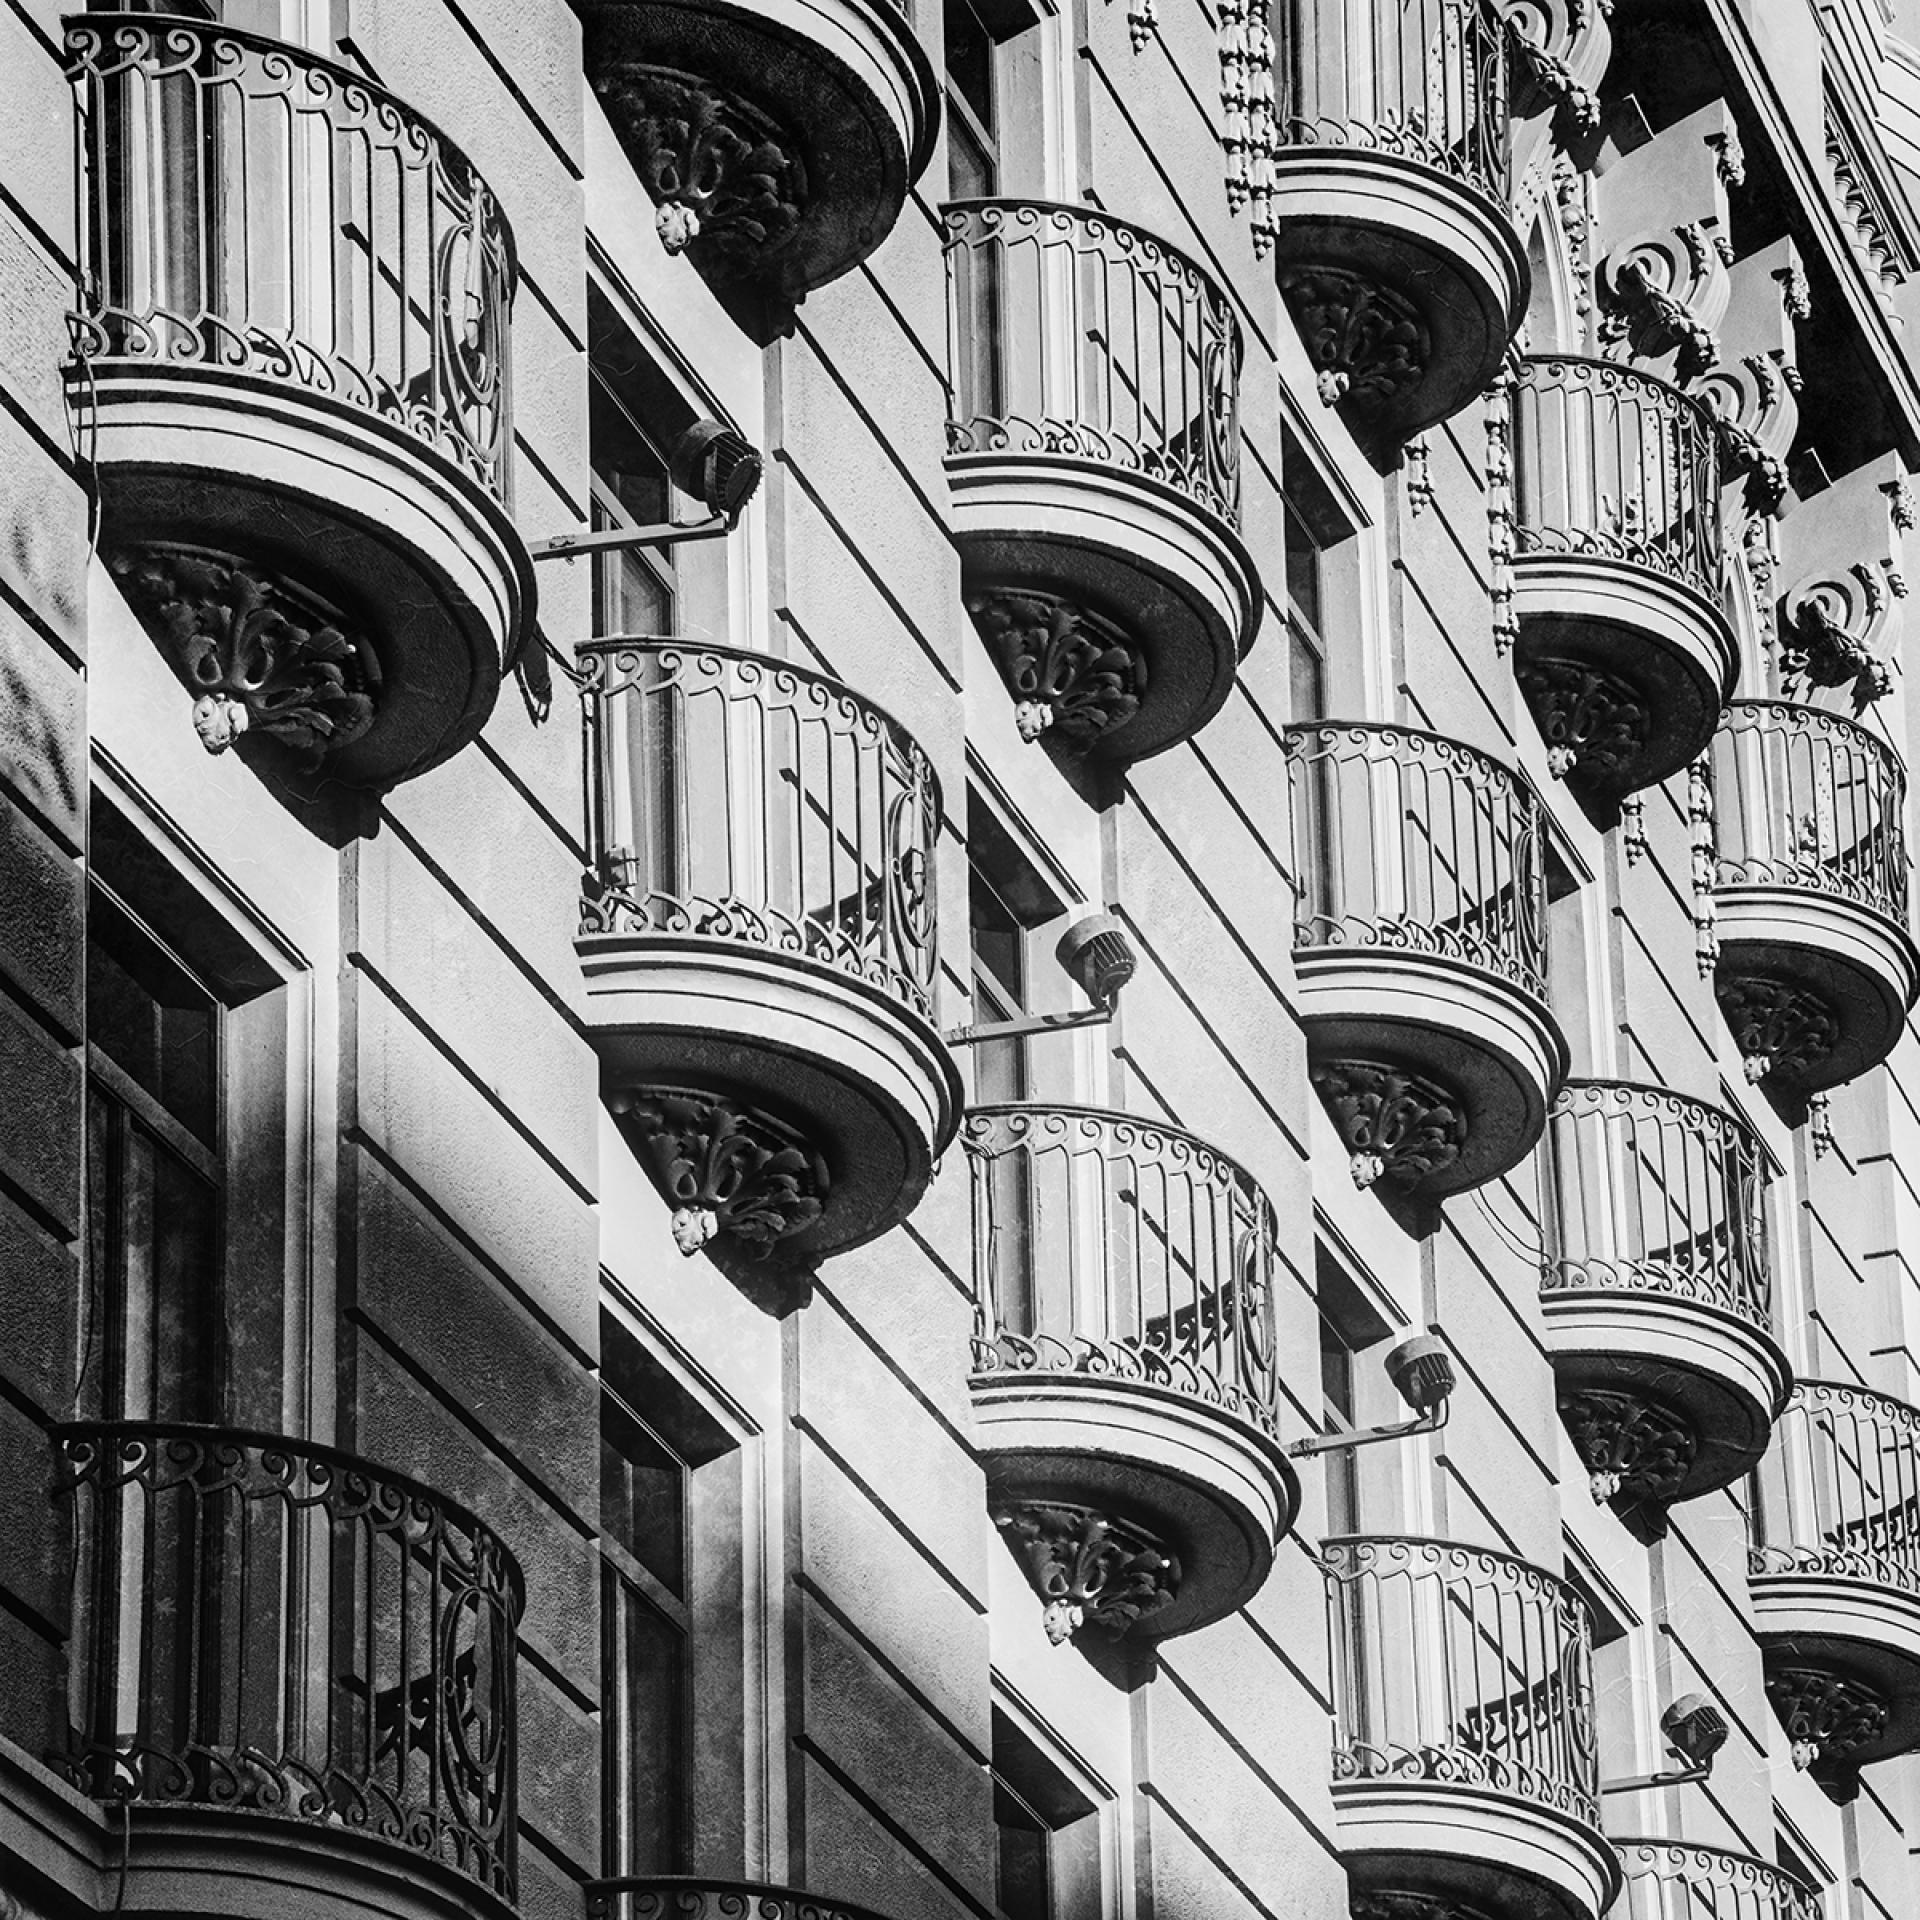 London Photography Awards Winner - Barcelona Balconies